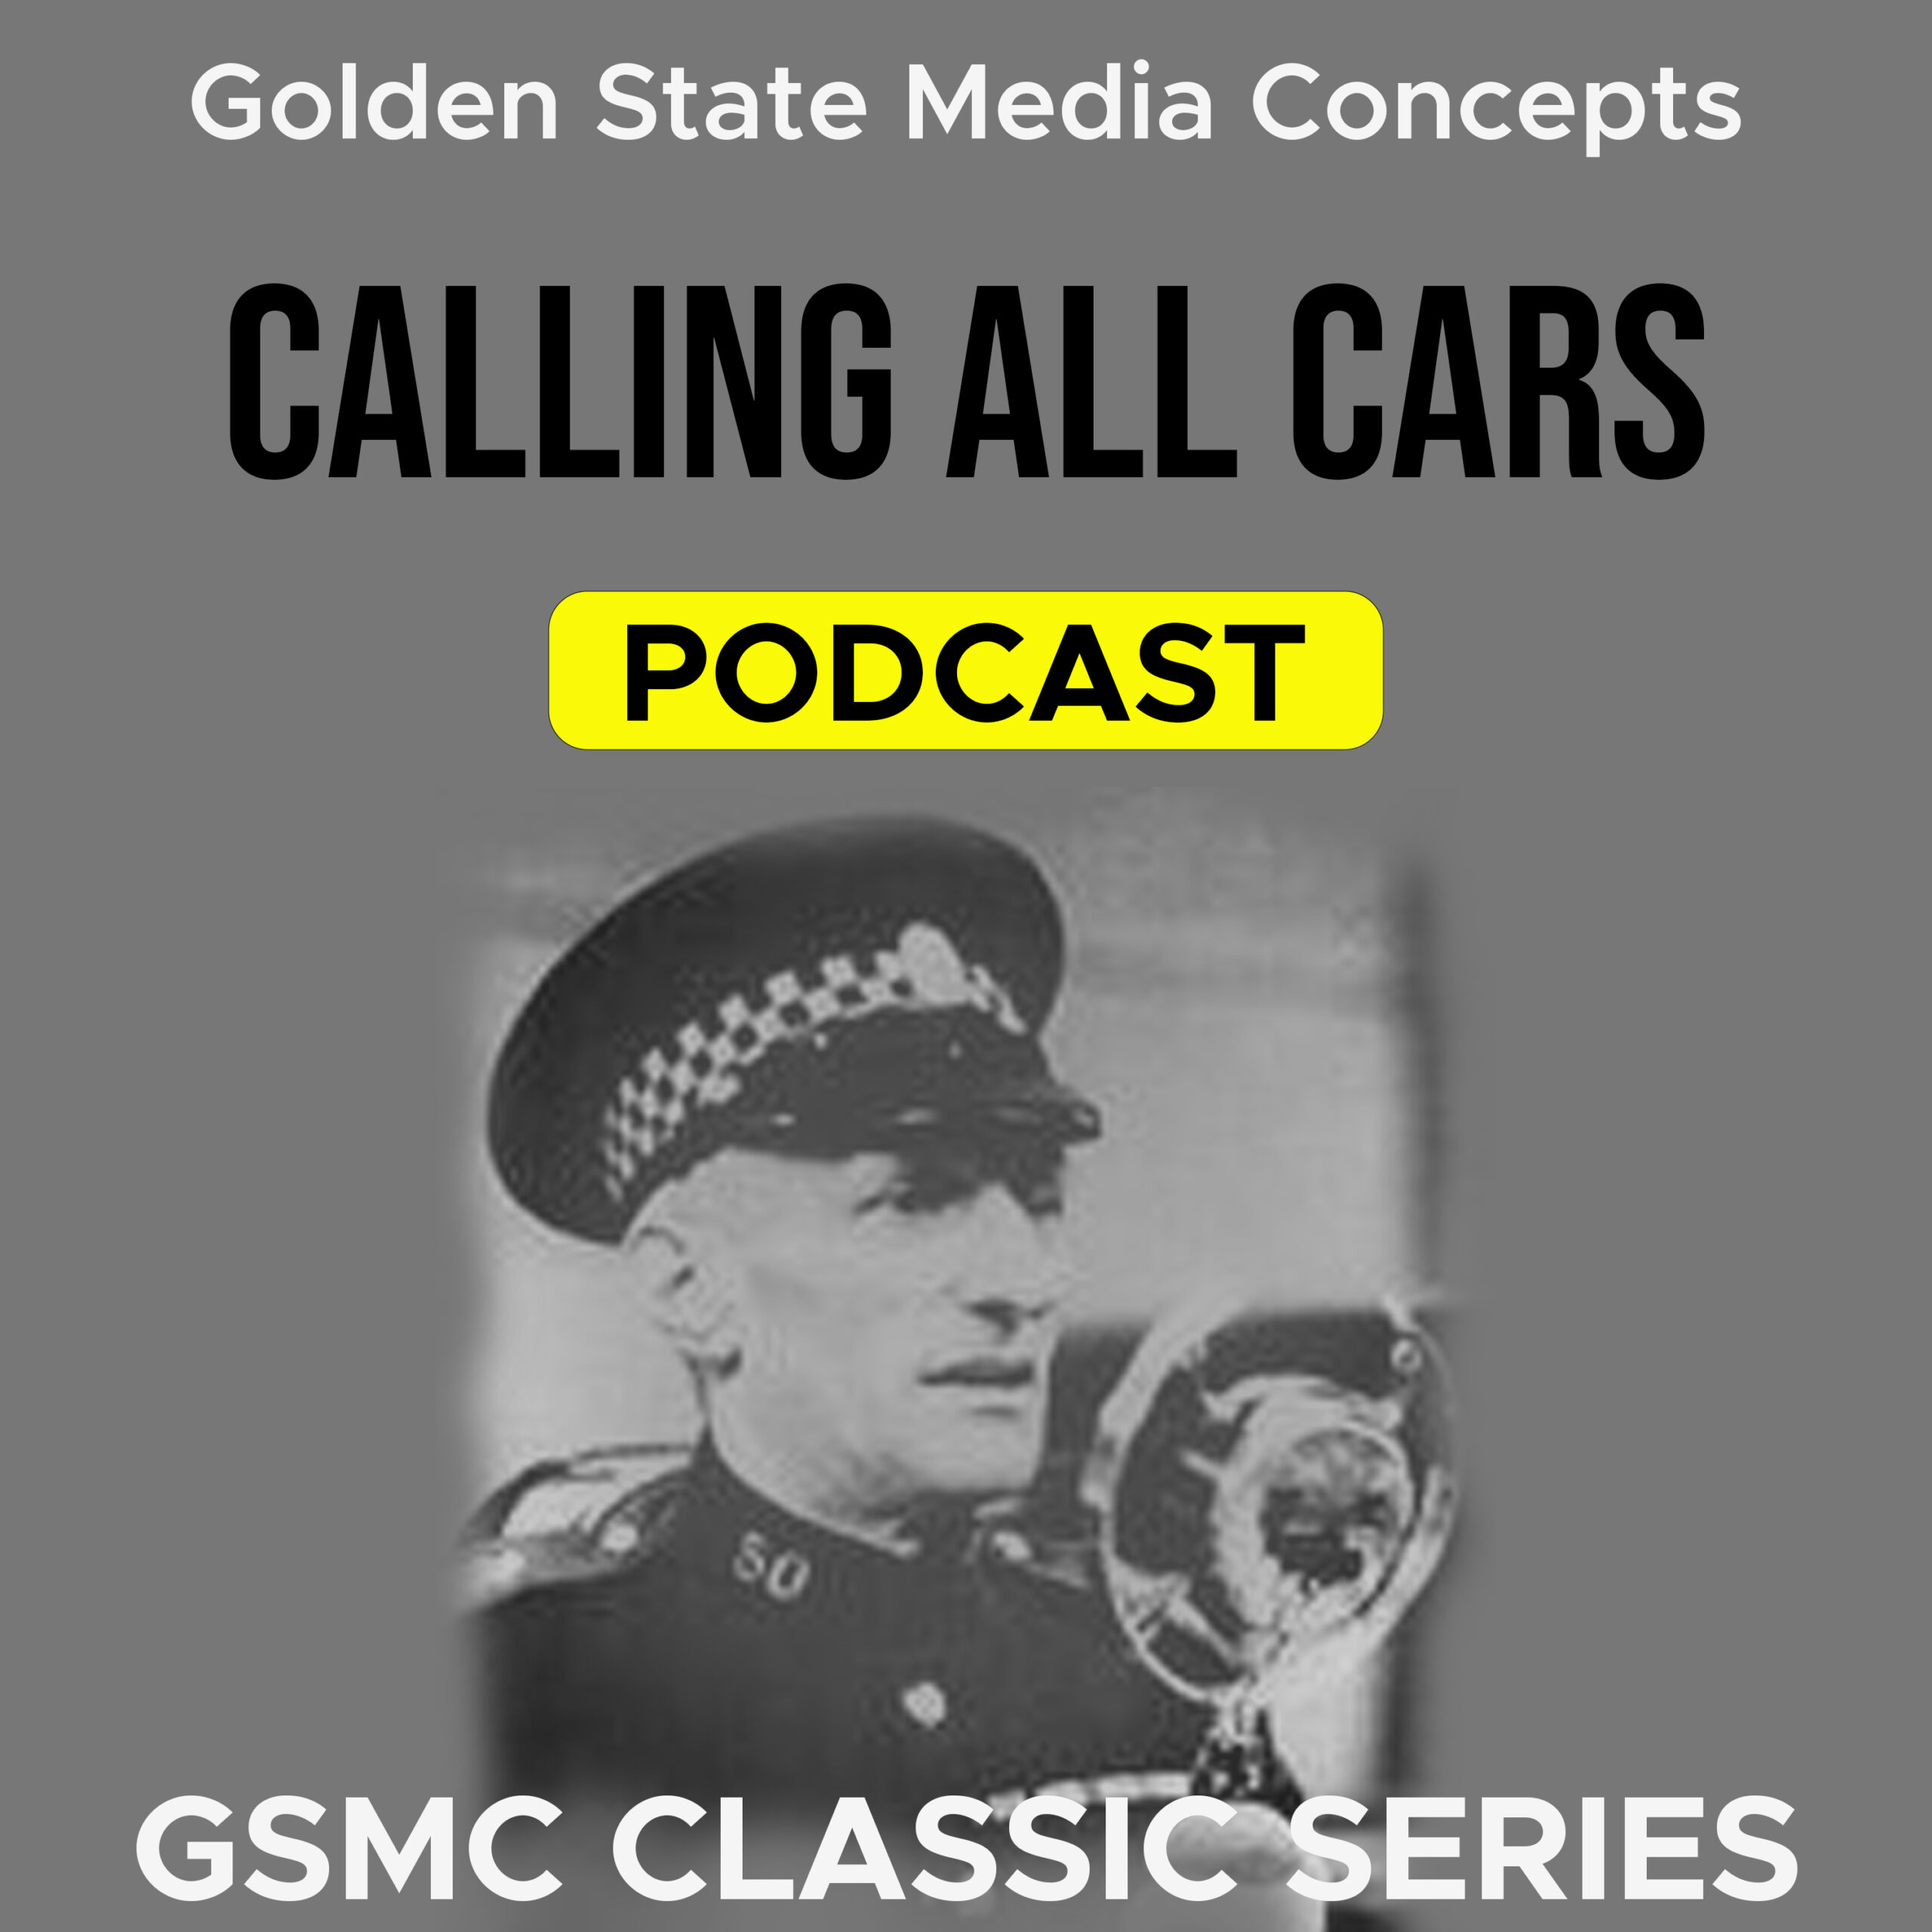 GSMC Classics: Calling all Cars